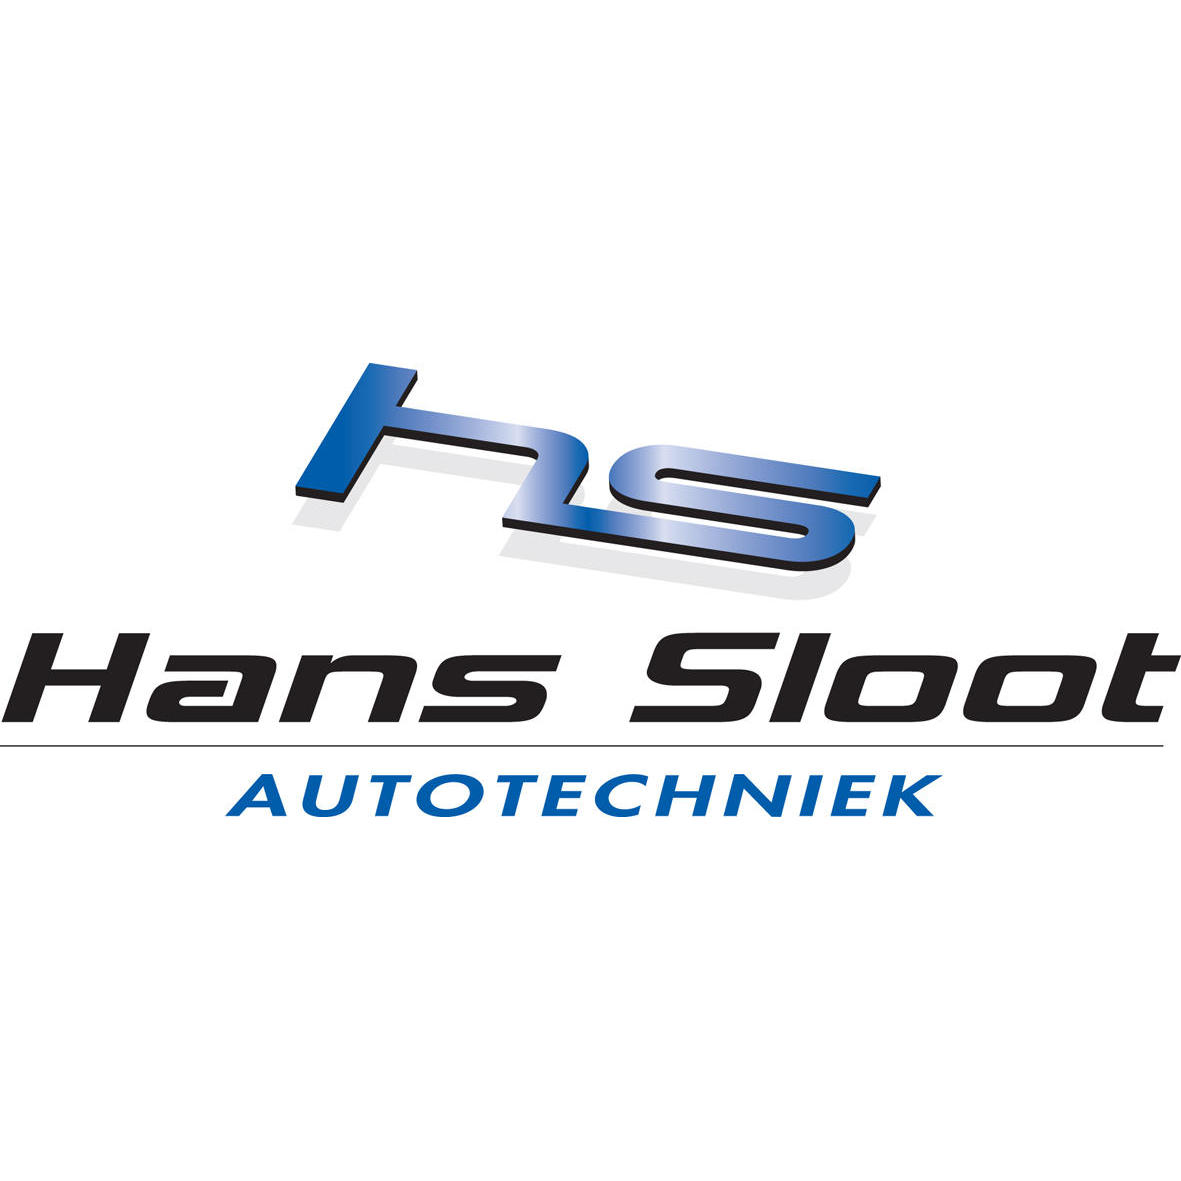 Autotechniek Hans Sloot Logo